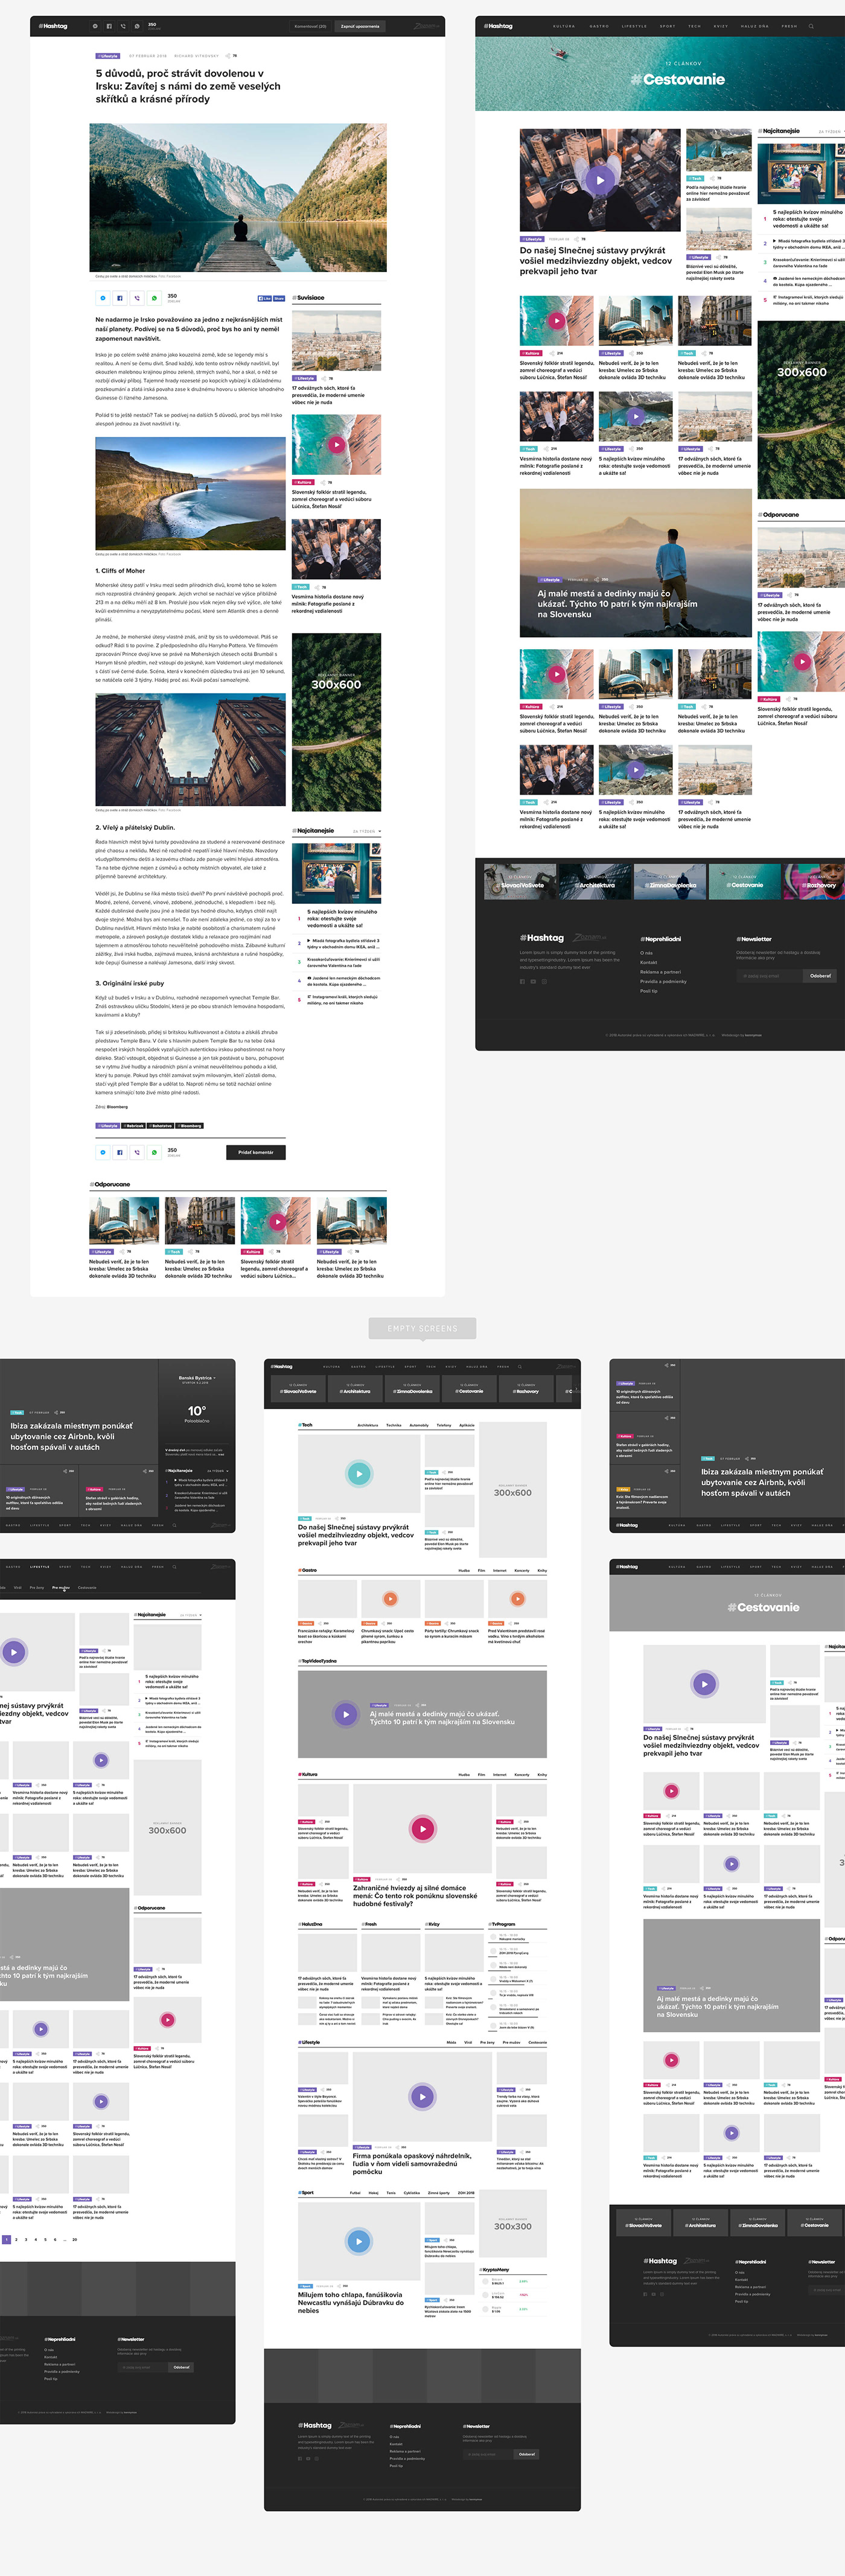 news Webdesign magazine teenage Blog Website user interface UI Theme Interface